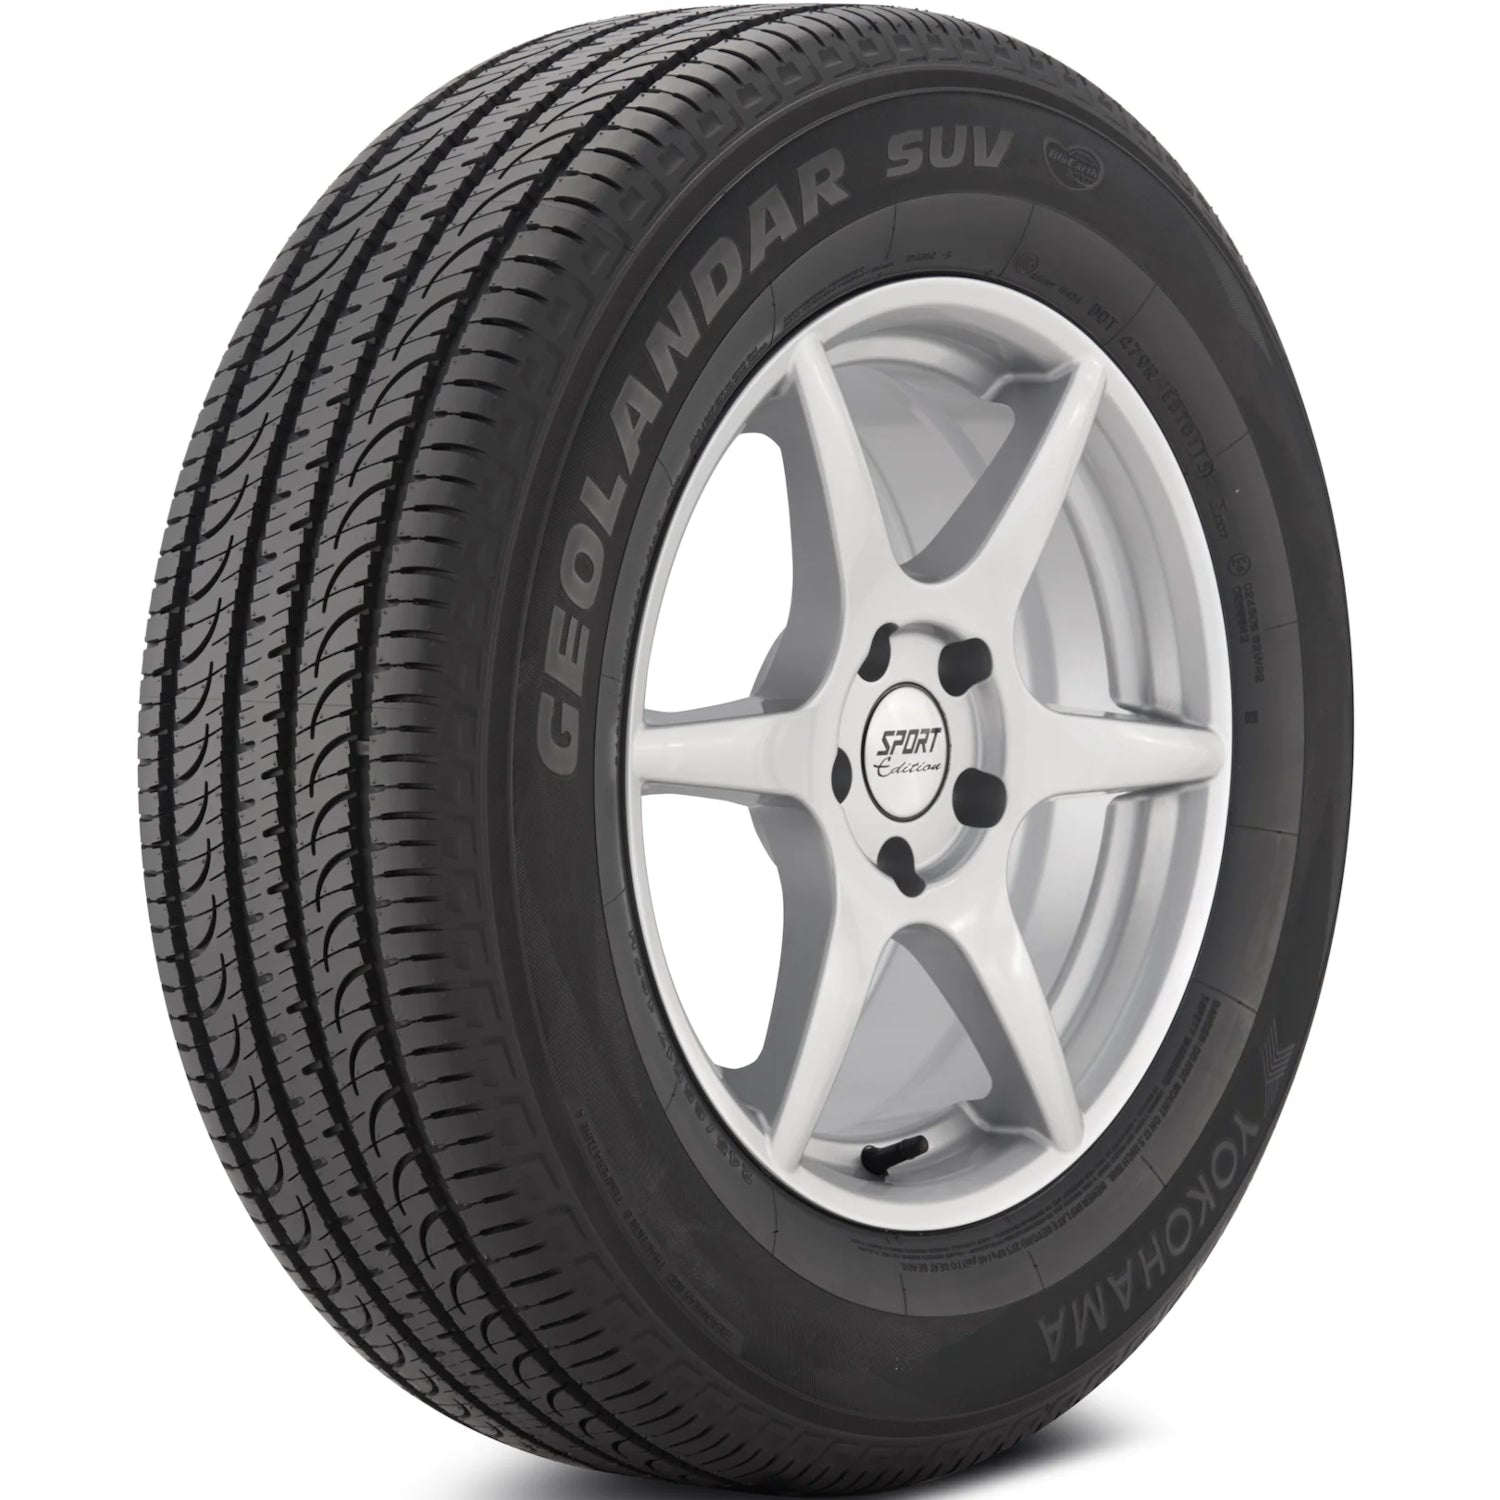 YOKOHAMA GEOLANDAR G055 235/60R17 (28X9.3R 17) Tires